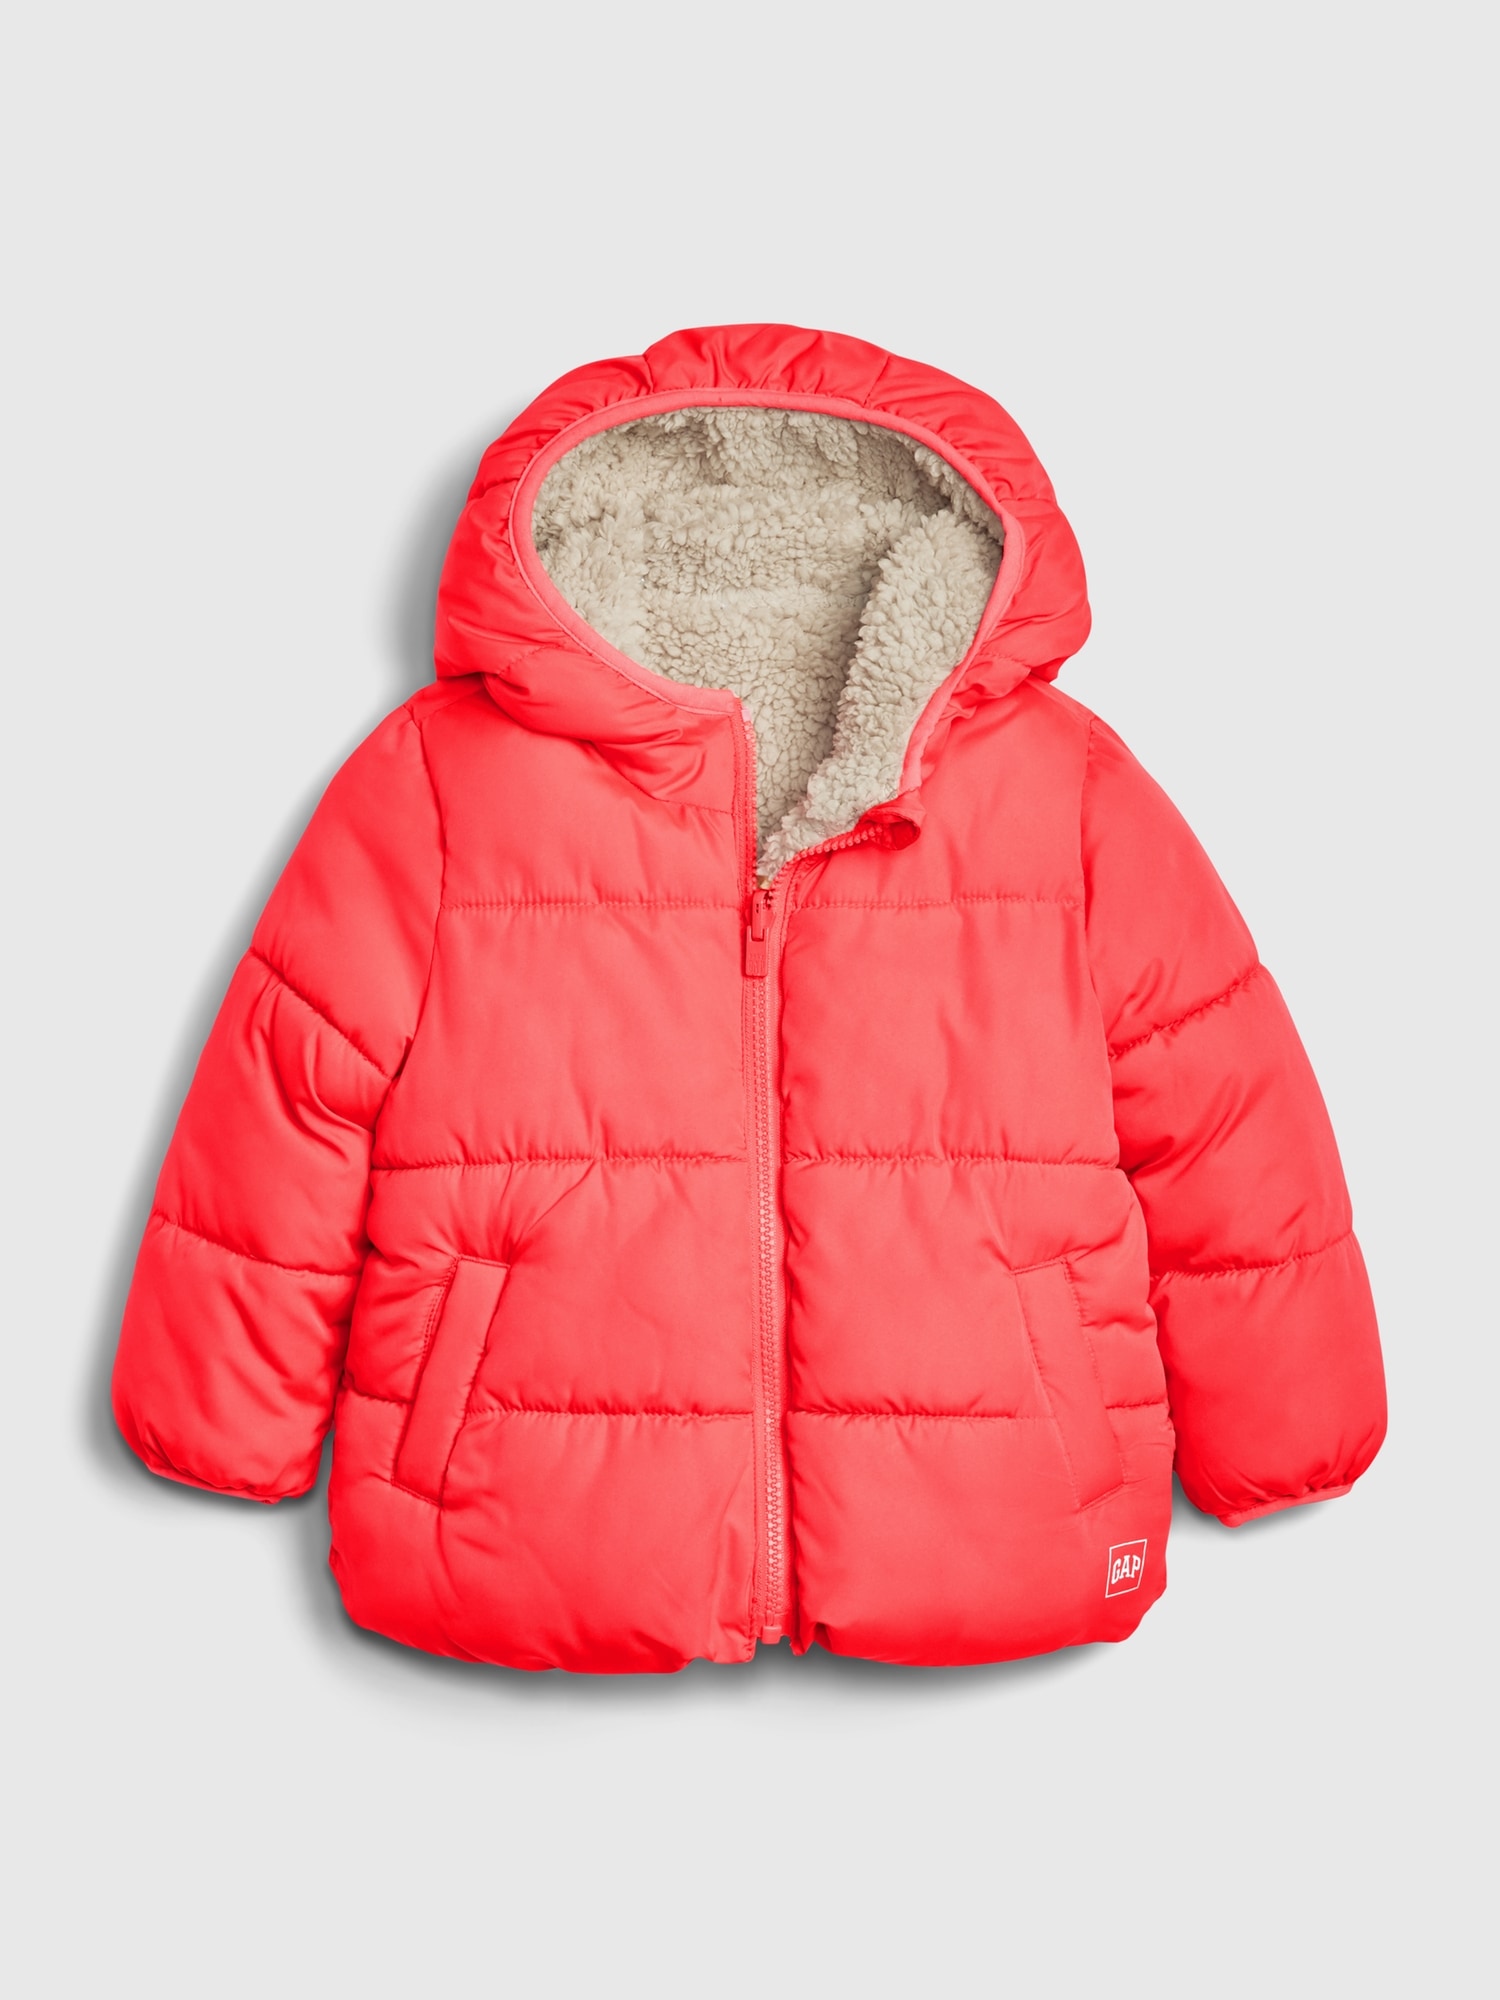 coldcontrol lightweight puffer jacket